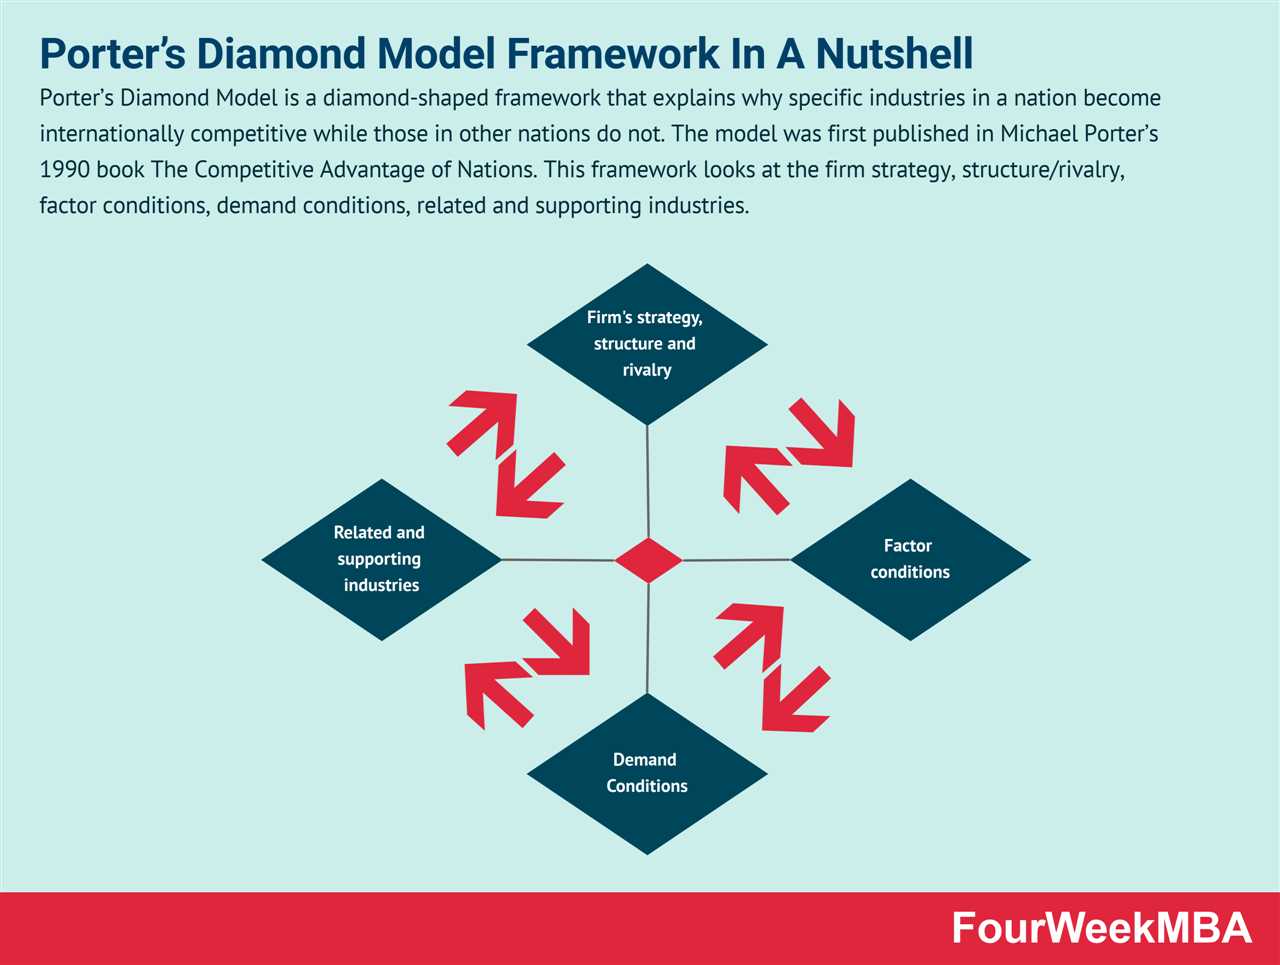 What is the Porter Diamond Model?